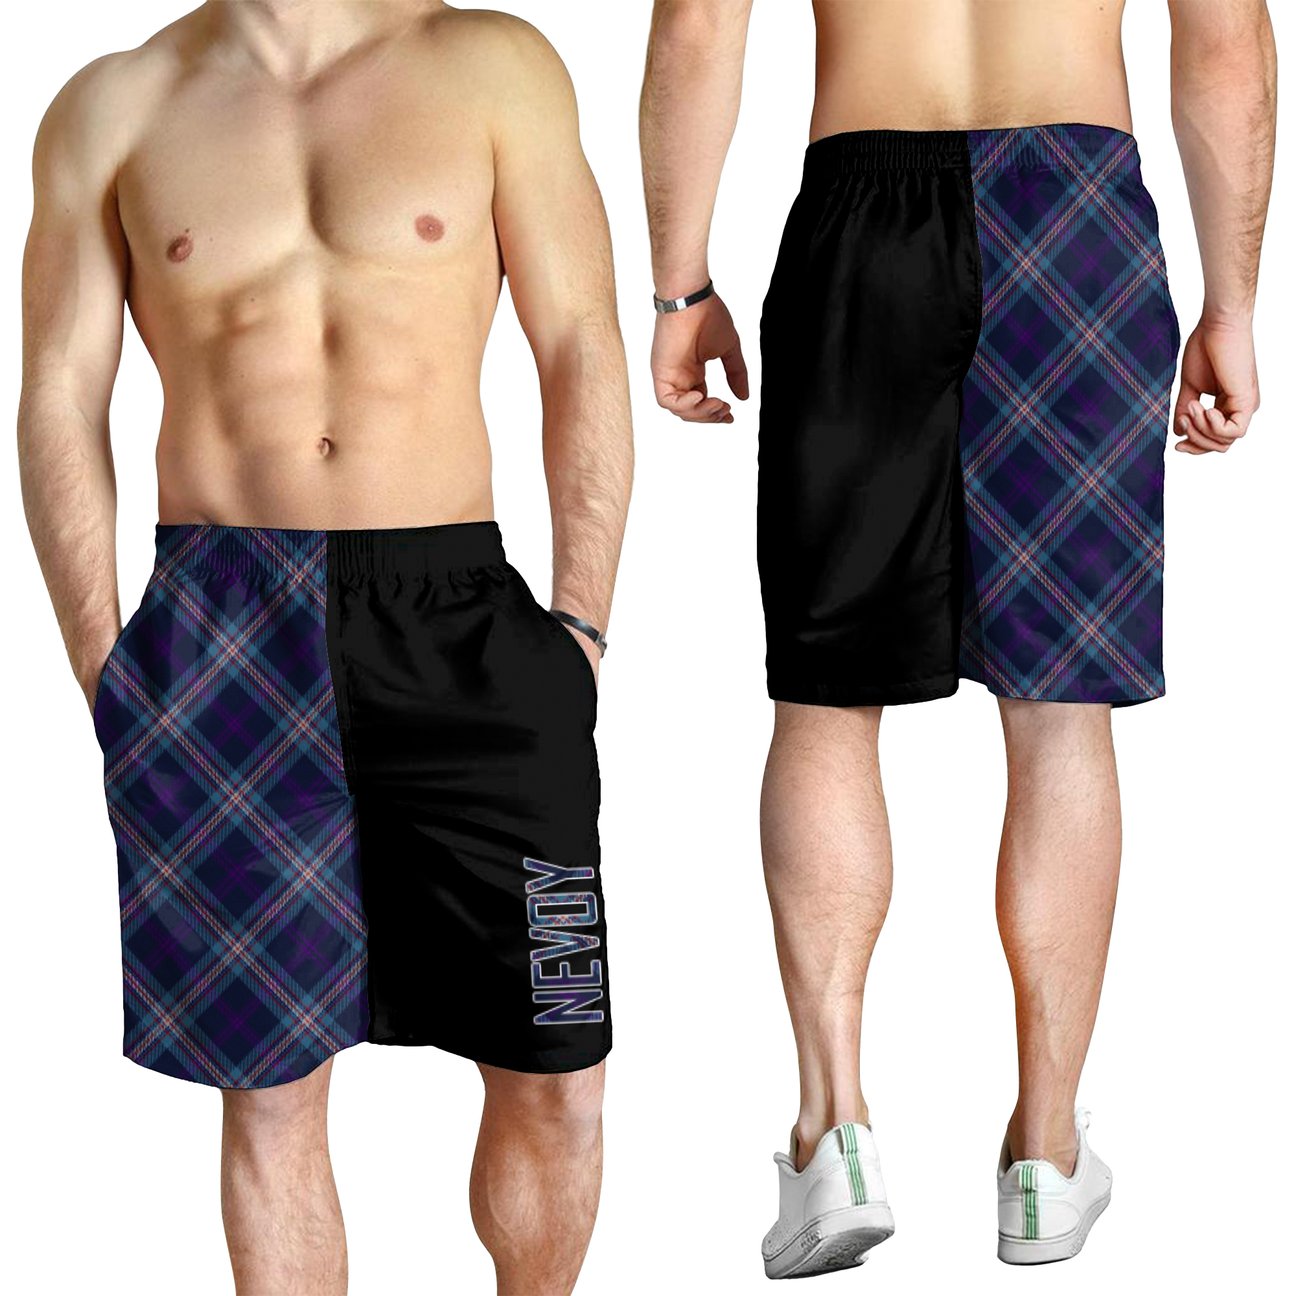 Nevoy Tartan Crest Men's Short - Cross Style